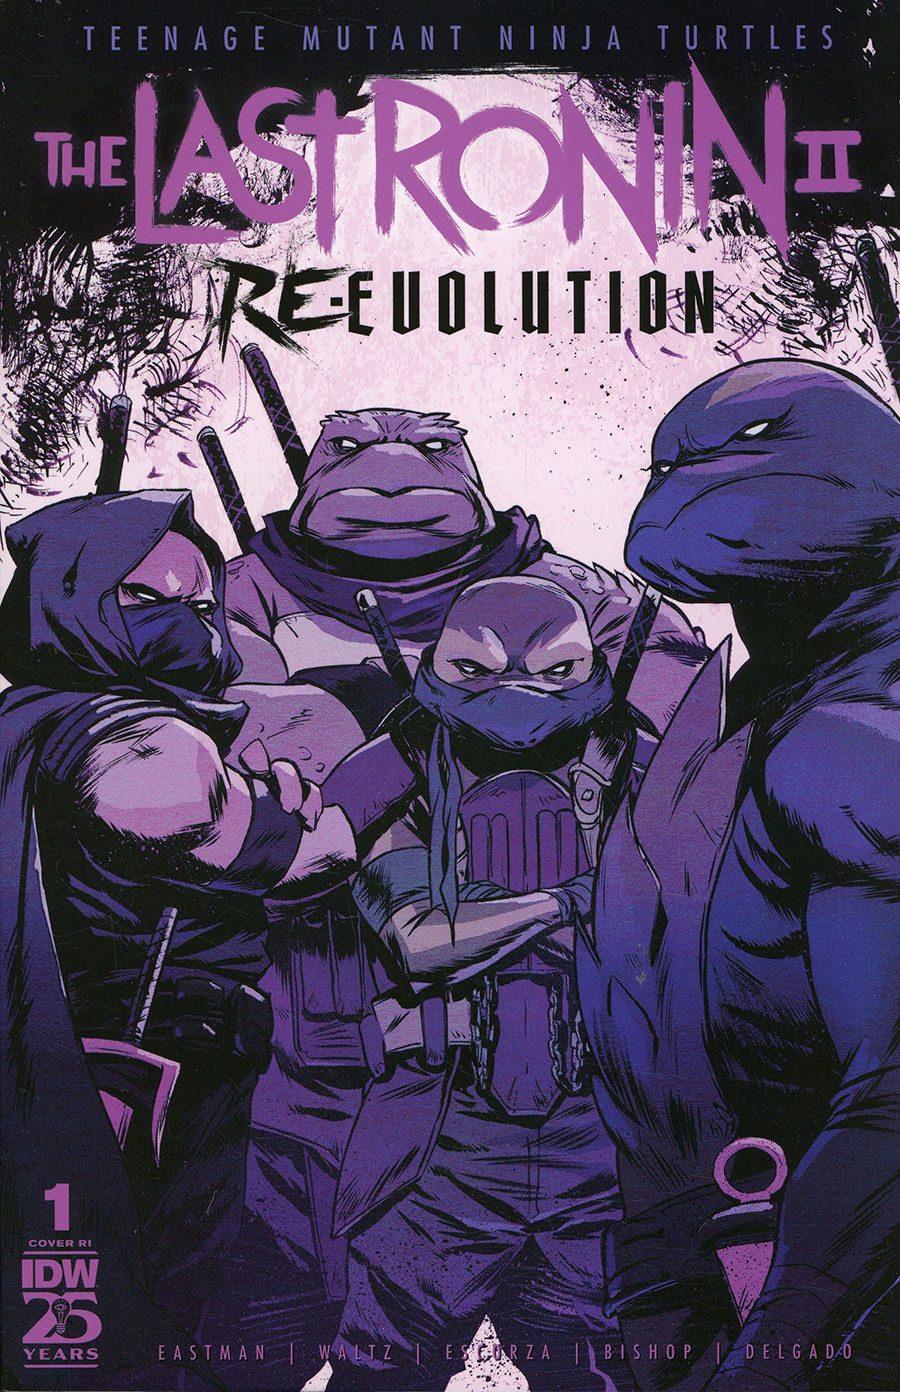 Teenage Mutant Ninja Turtles The Last Ronin II Re-Evolution #1 Cover G Incentive Sanford Greene Variant Cover